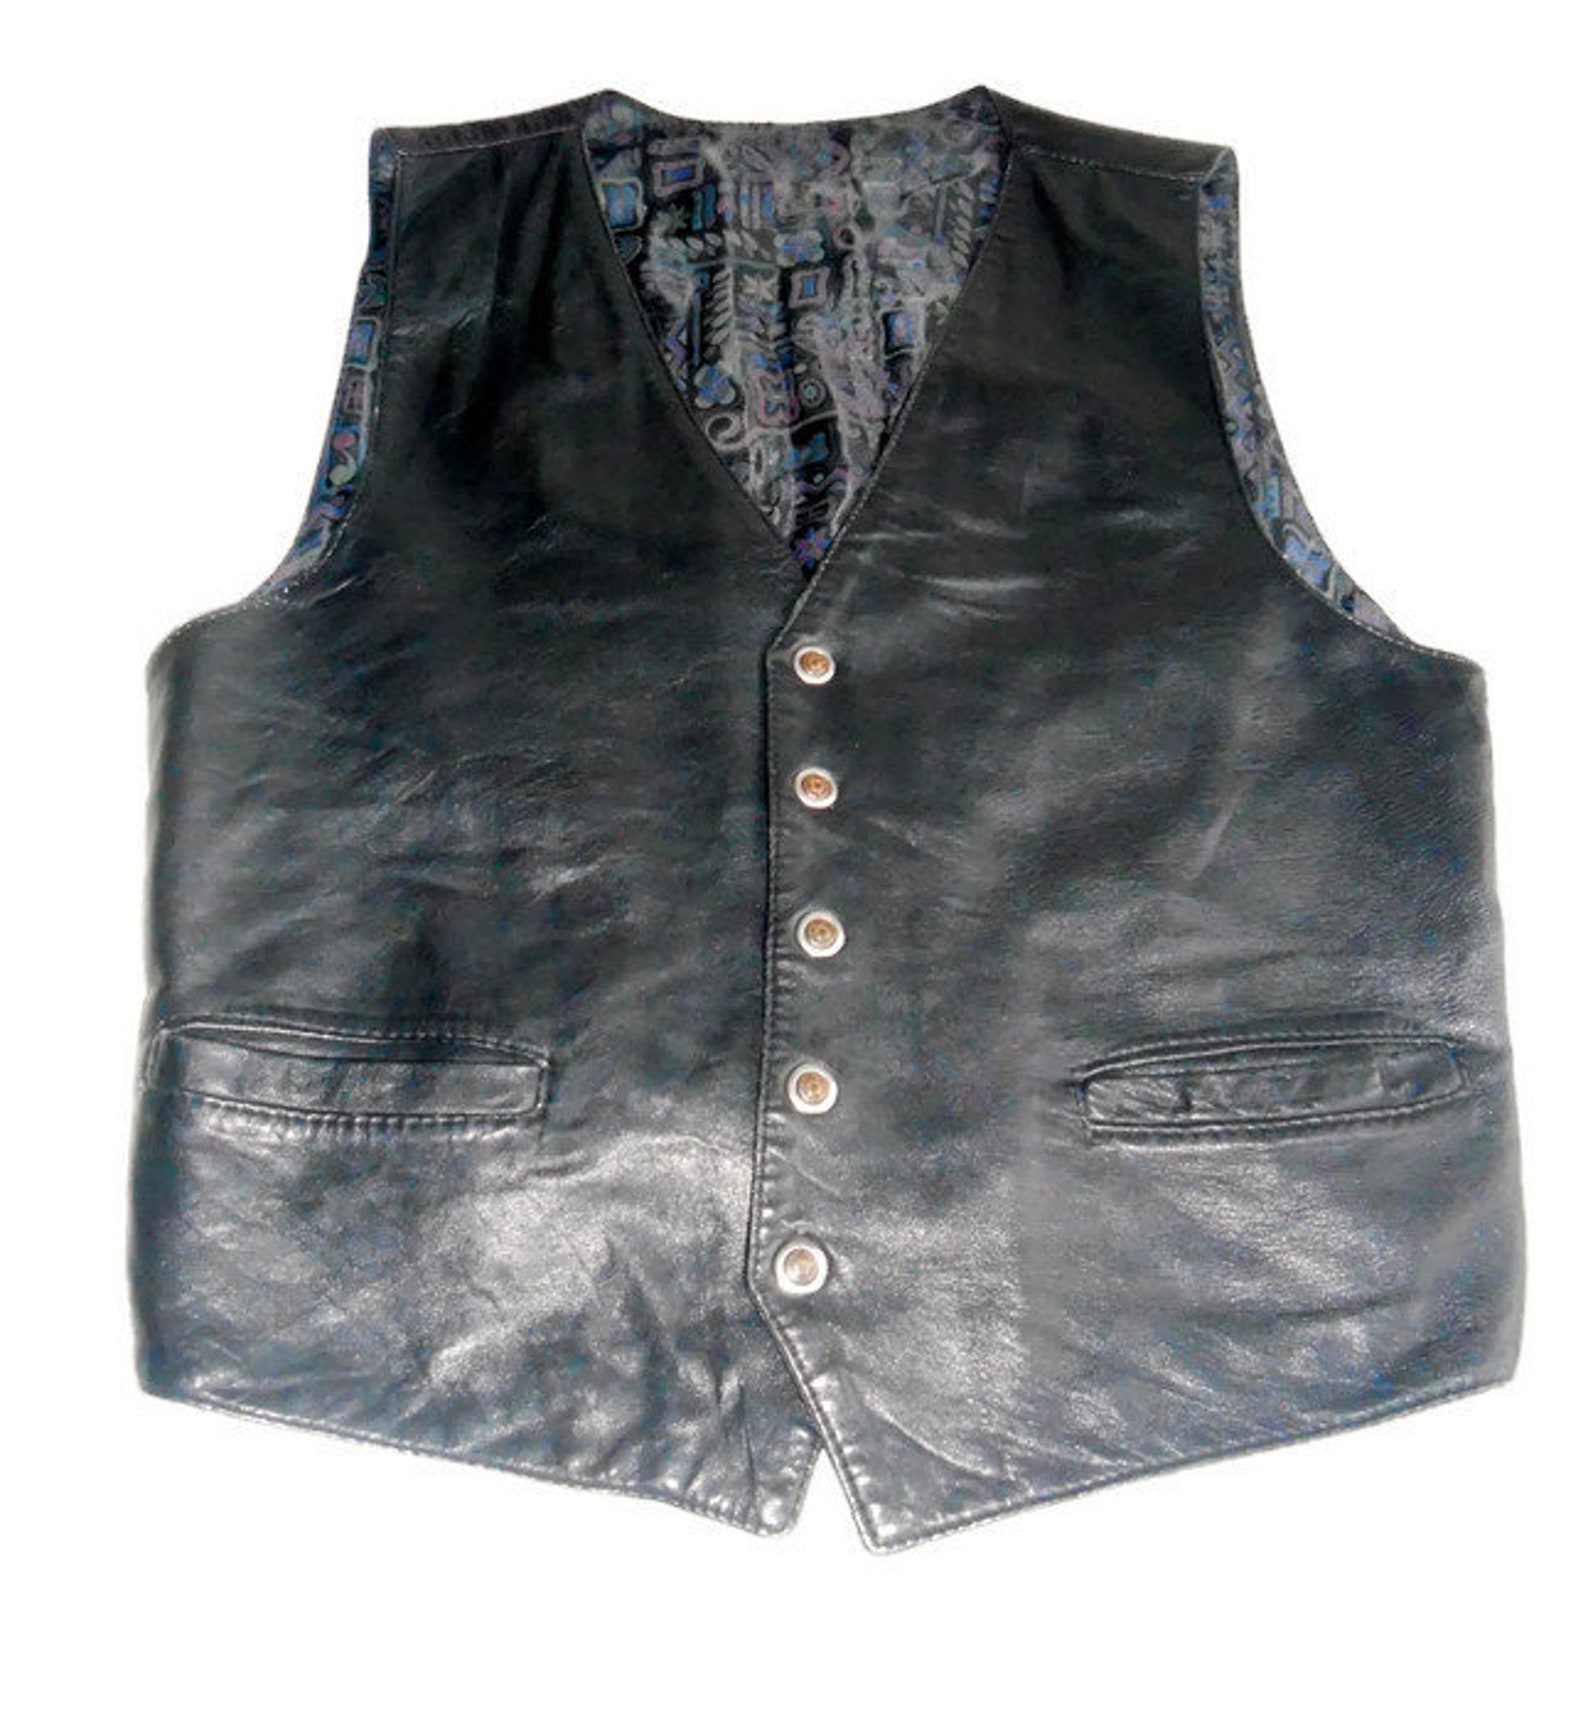 Black leather Vest for men Vintage Italy M size Leather | Etsy